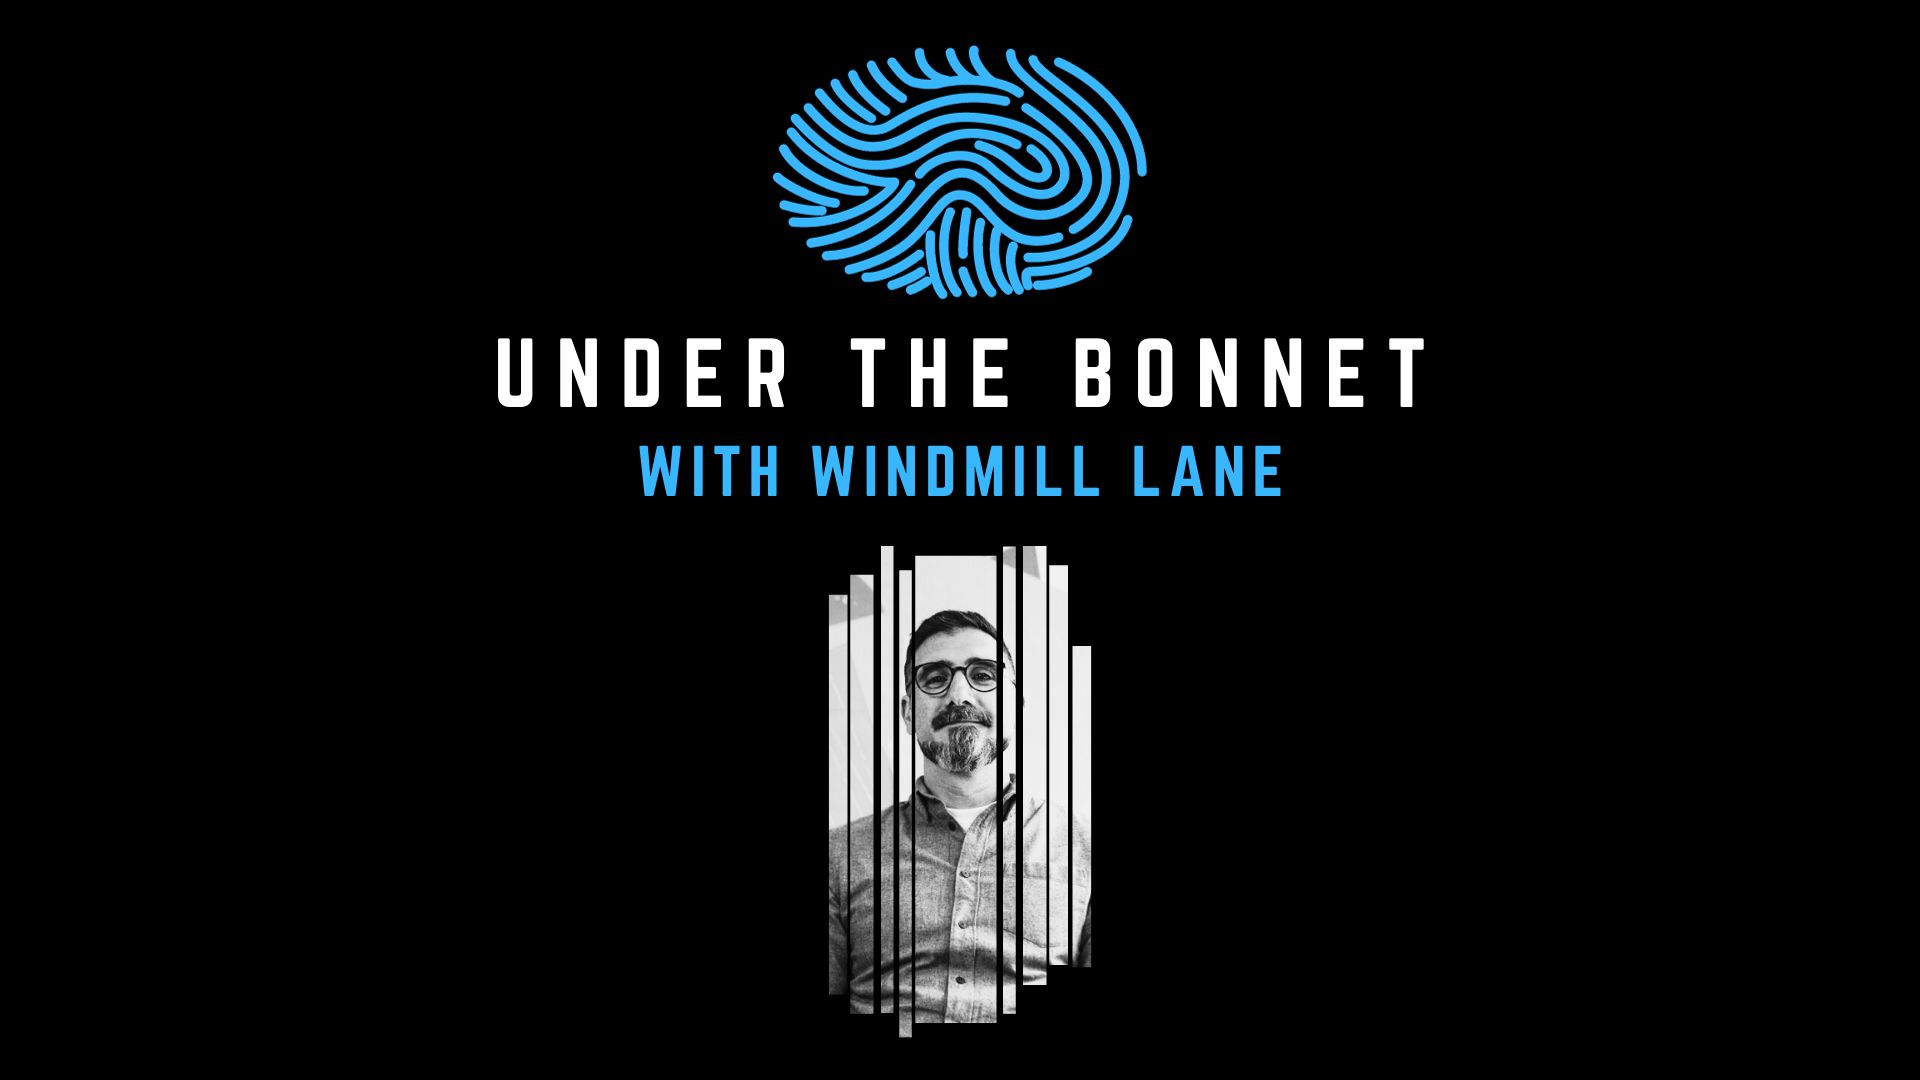 Under the Bonnet at Windmill Lane